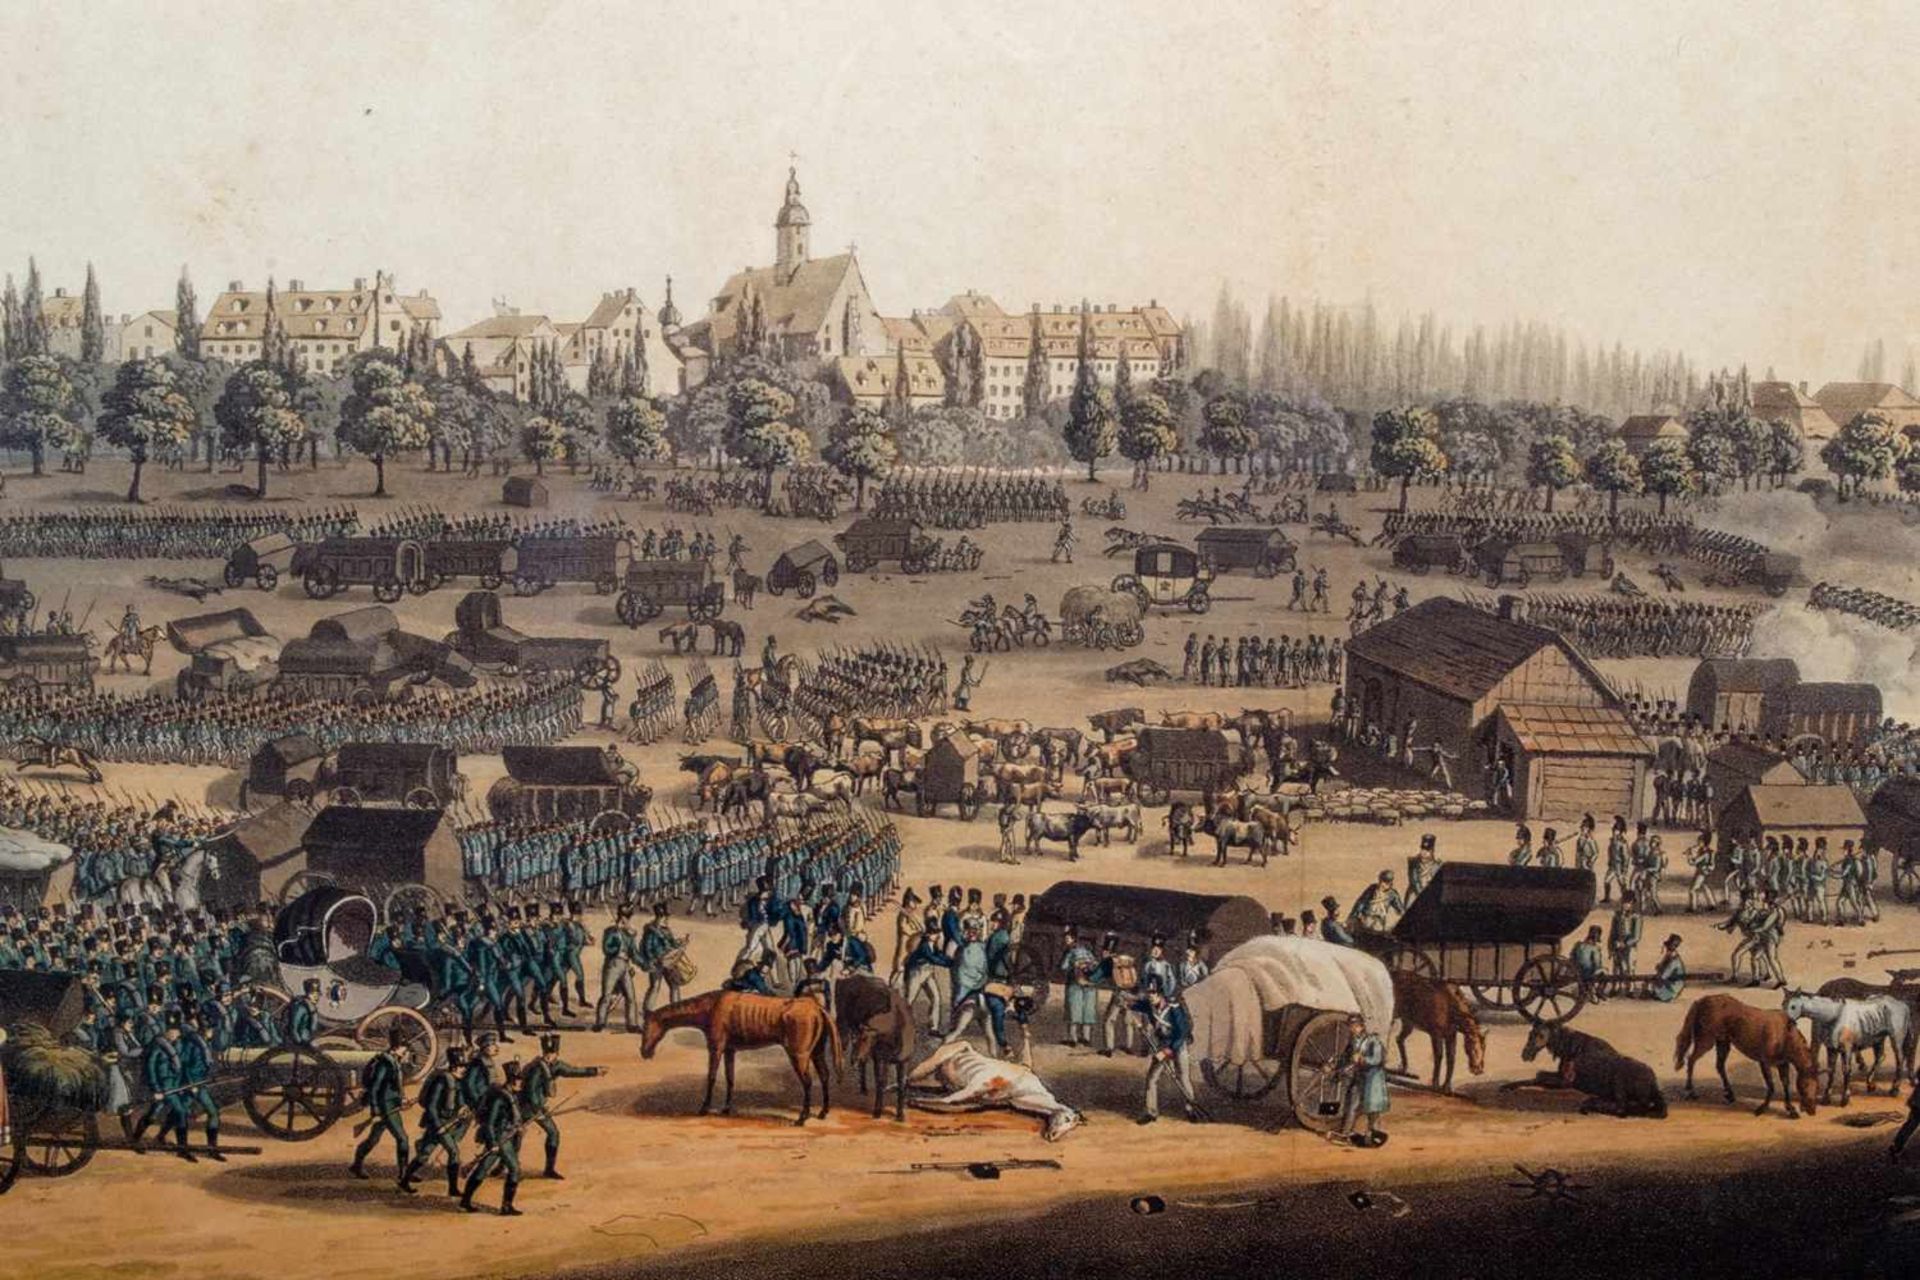 Völkerschlacht bei Leipzig am 19. Oct. 1813 - "Precipitale Flight of teh French Armies". - Image 5 of 6